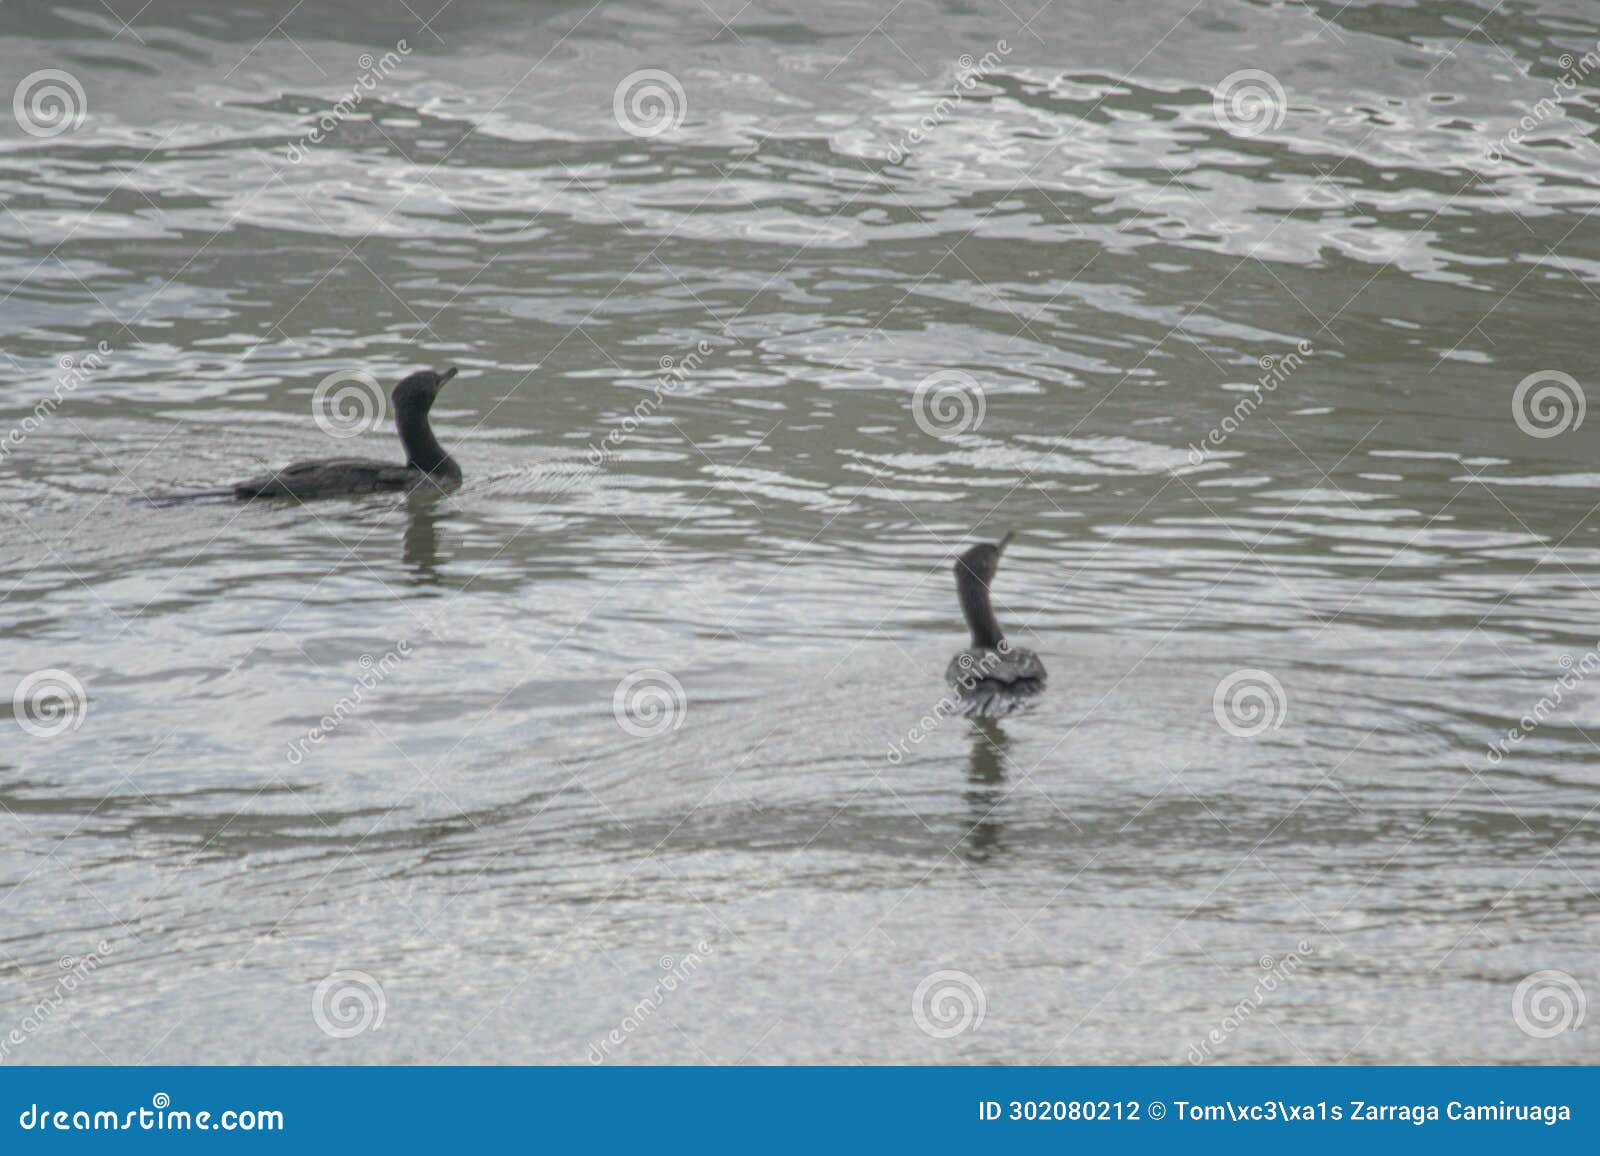 bigua cormorant swimming on the waves